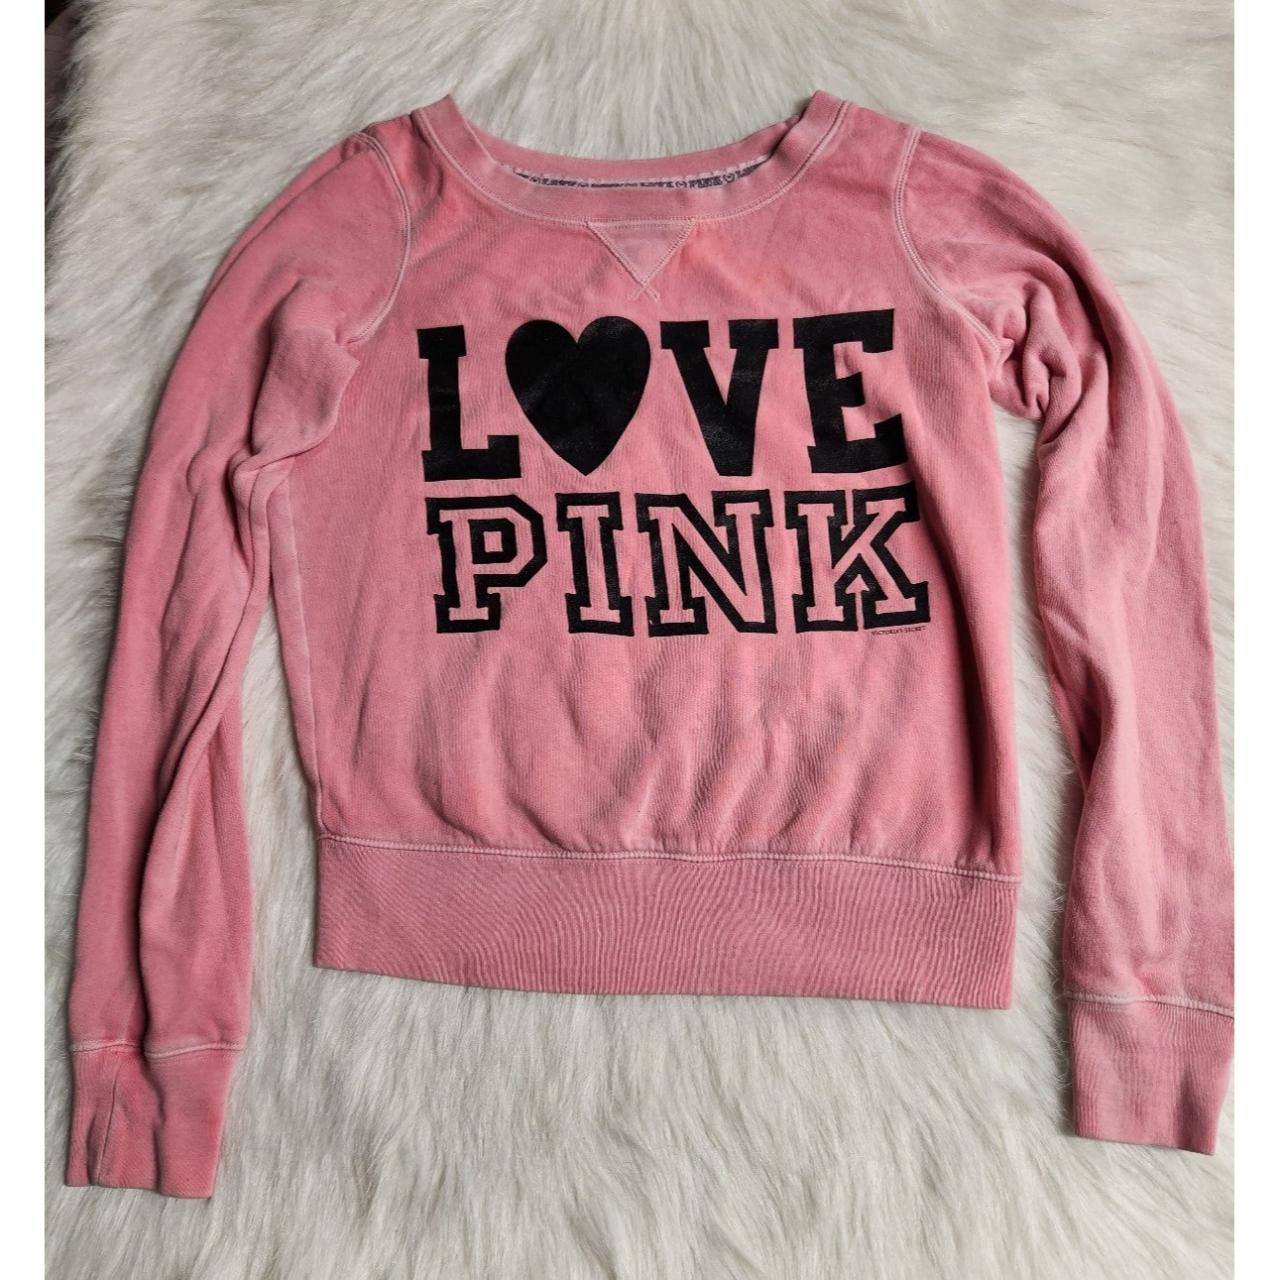 Love Pink by Victoria's Secret